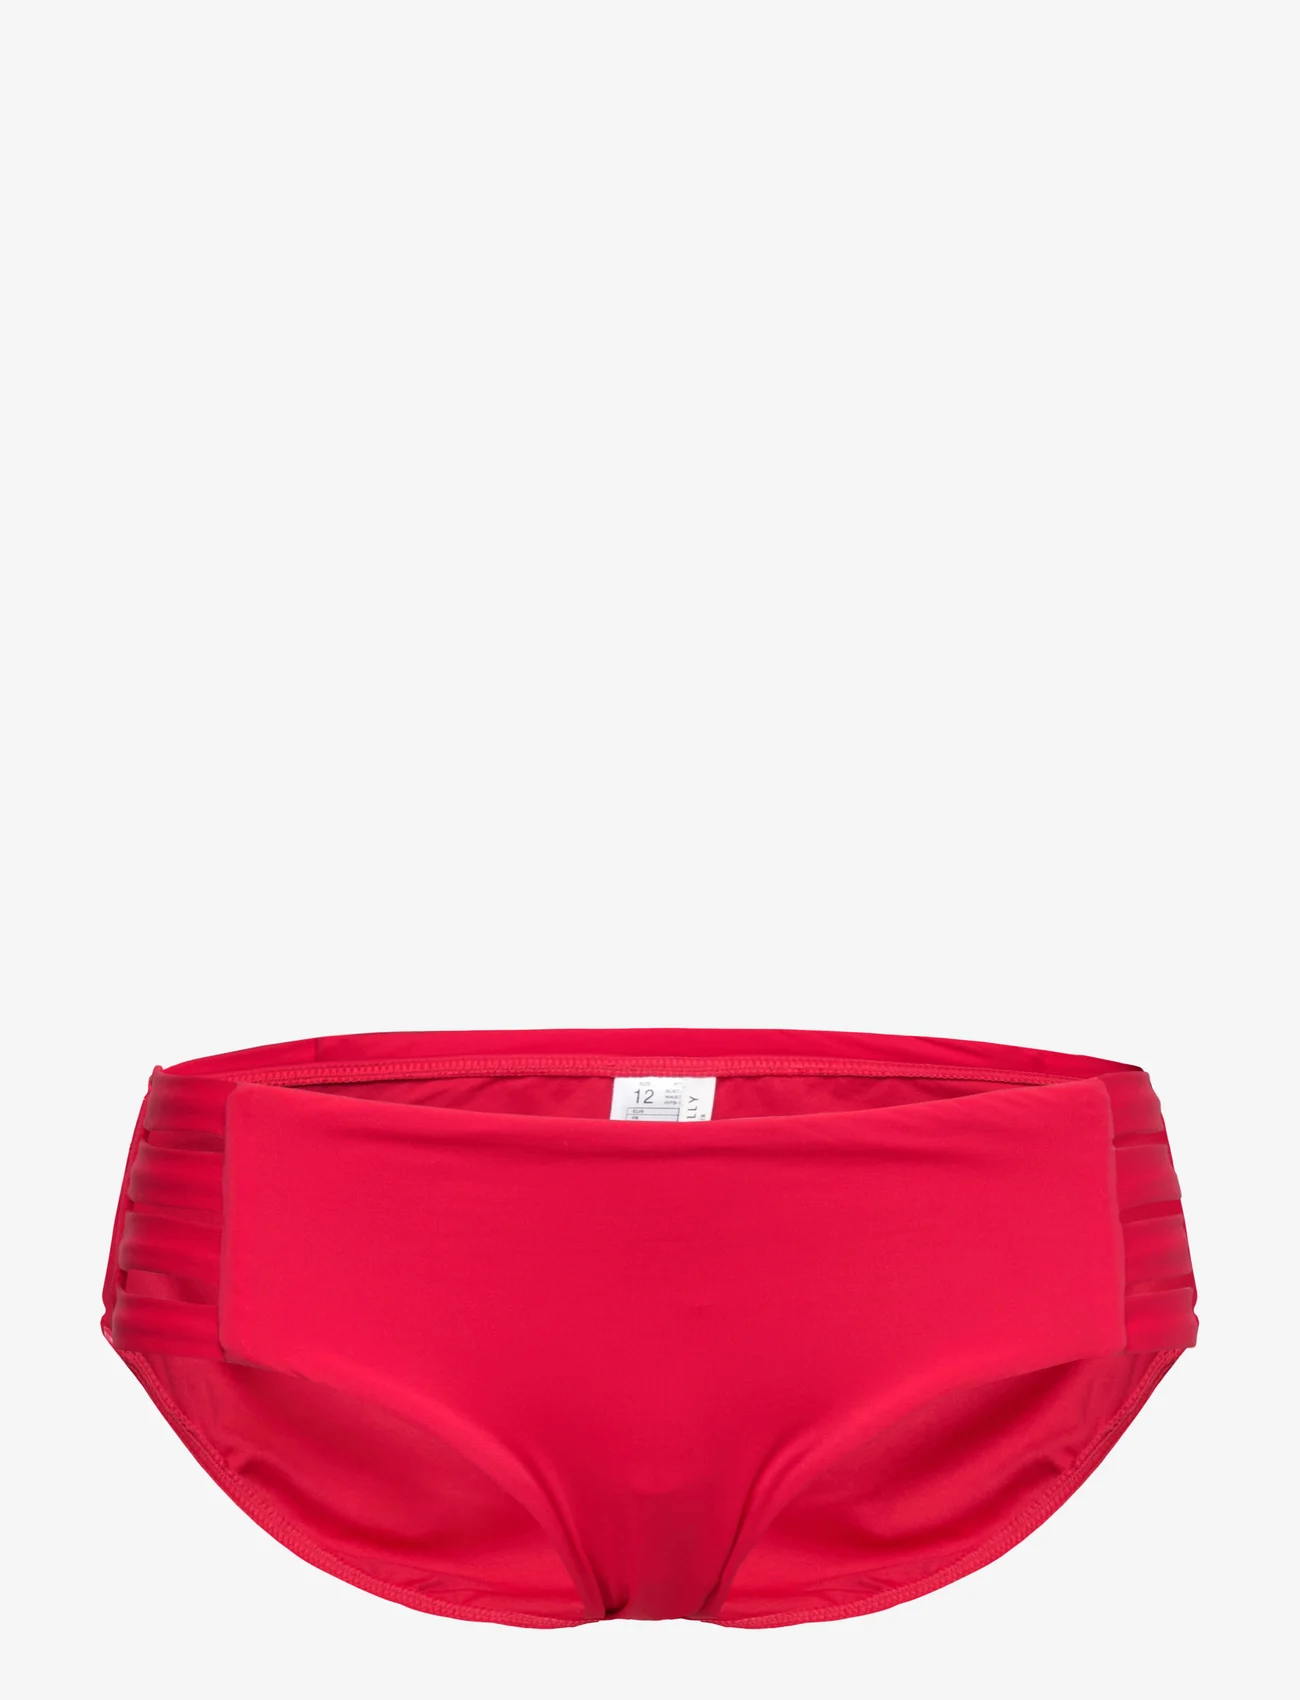 Seafolly - S.Collective Multi Strap Hipster Pant - bikini briefs - chilli red - 0